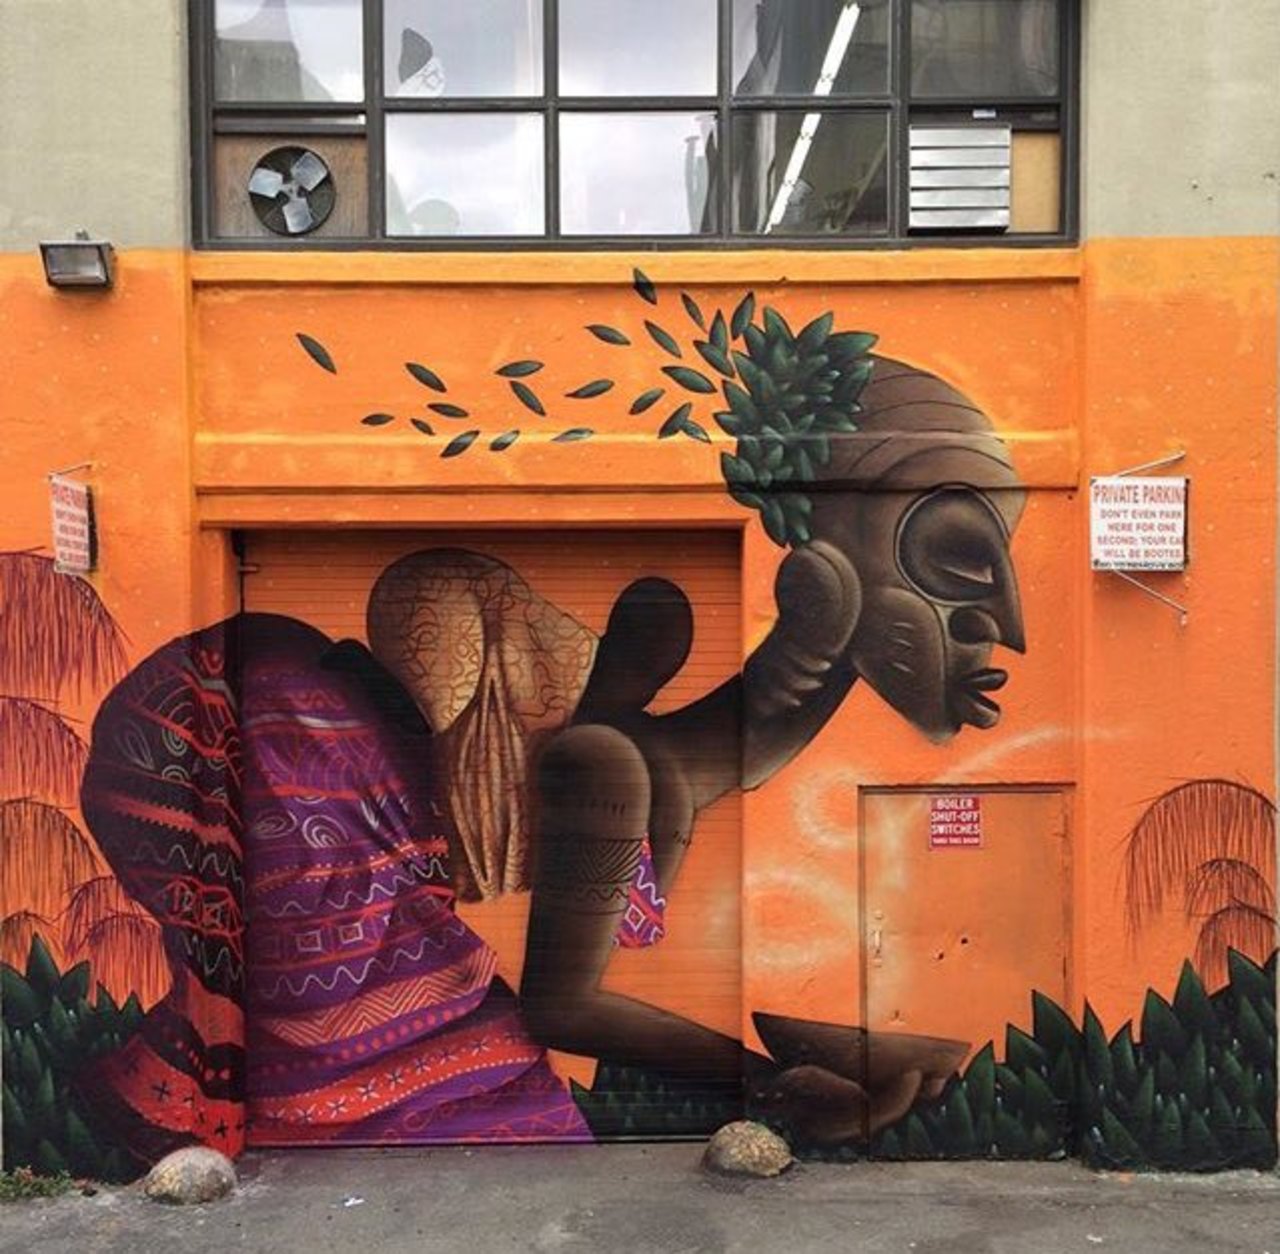 RT 1alnoob New Street Art by Alexandre Keto in NYC 

#art #graffiti #mural #streetart https://t.co/Jbx6GSQ1NE